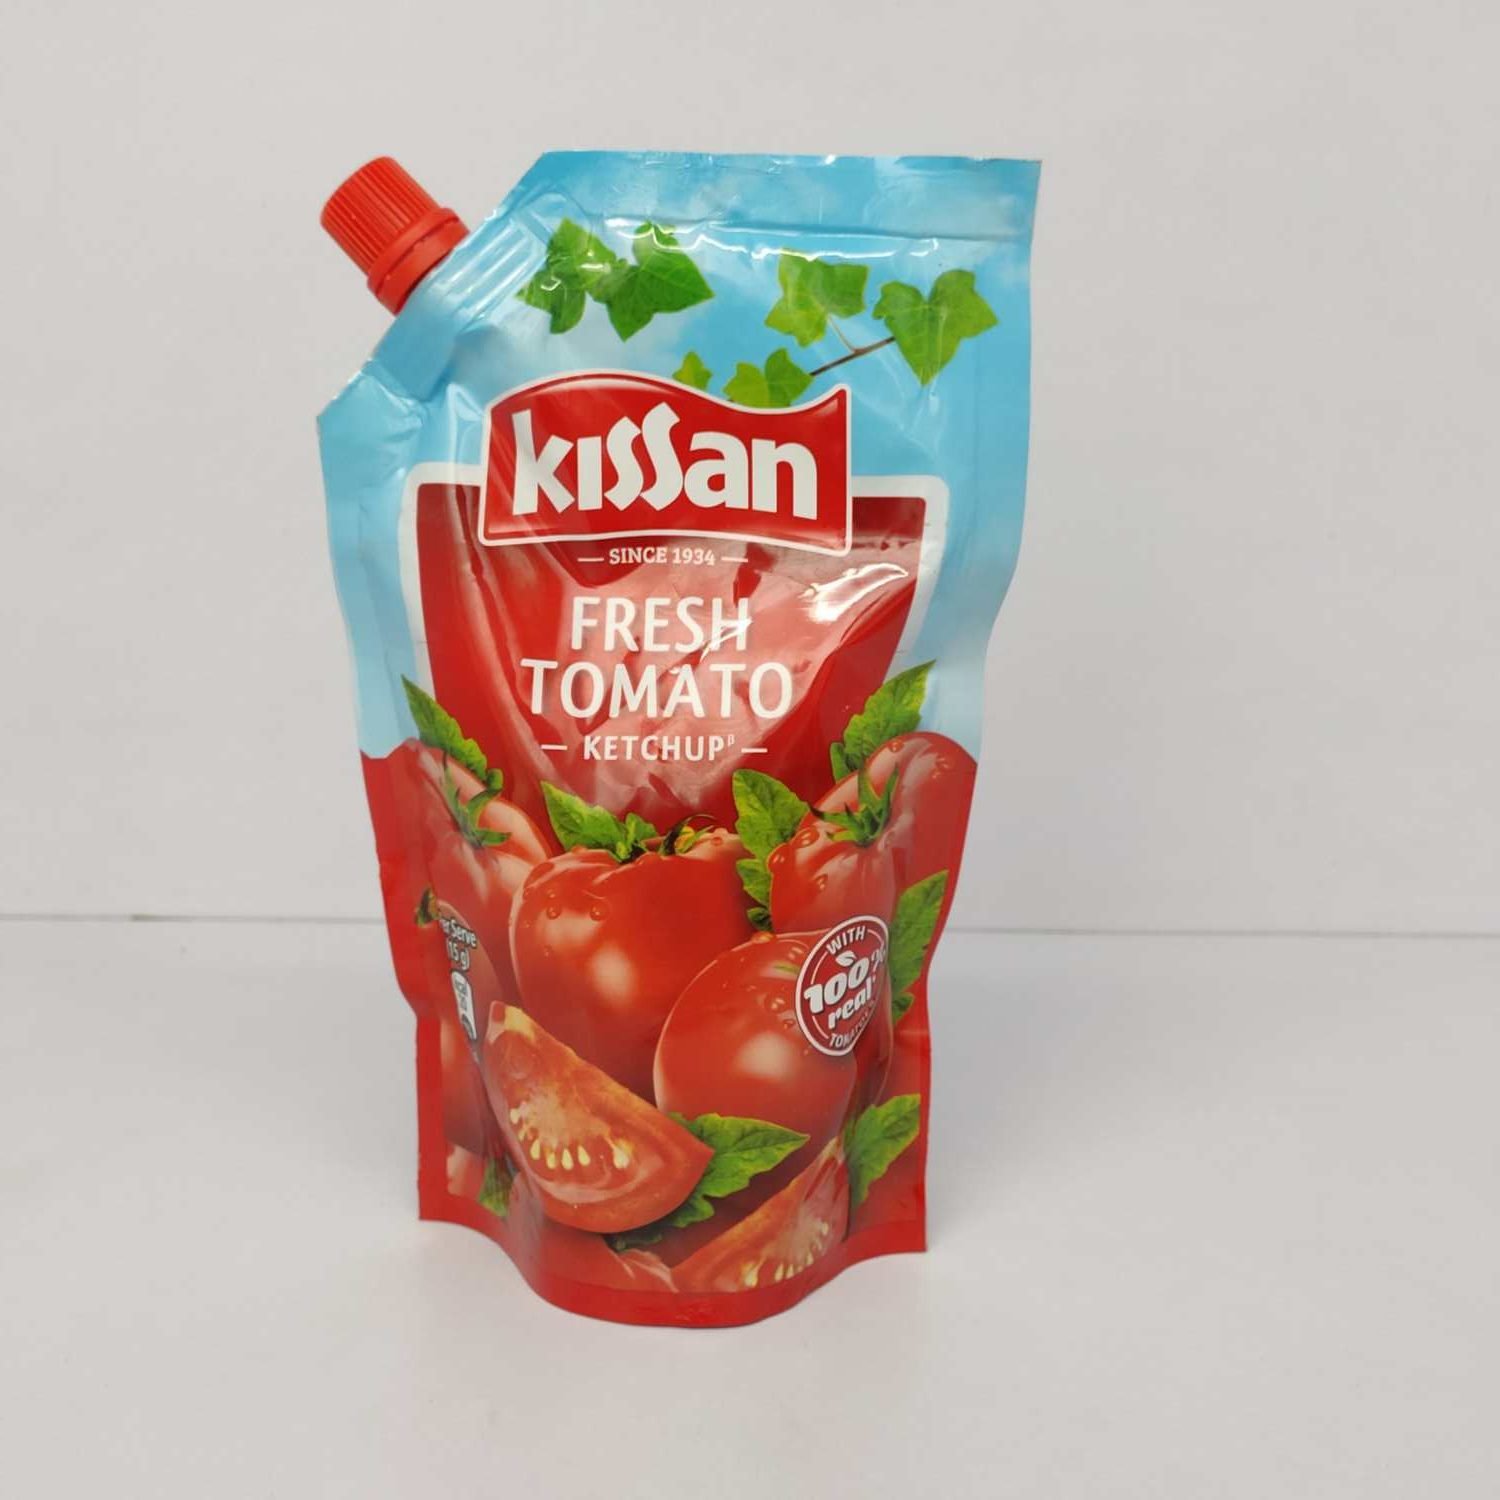 Kissan fresh tomato ketchup, 450 grams